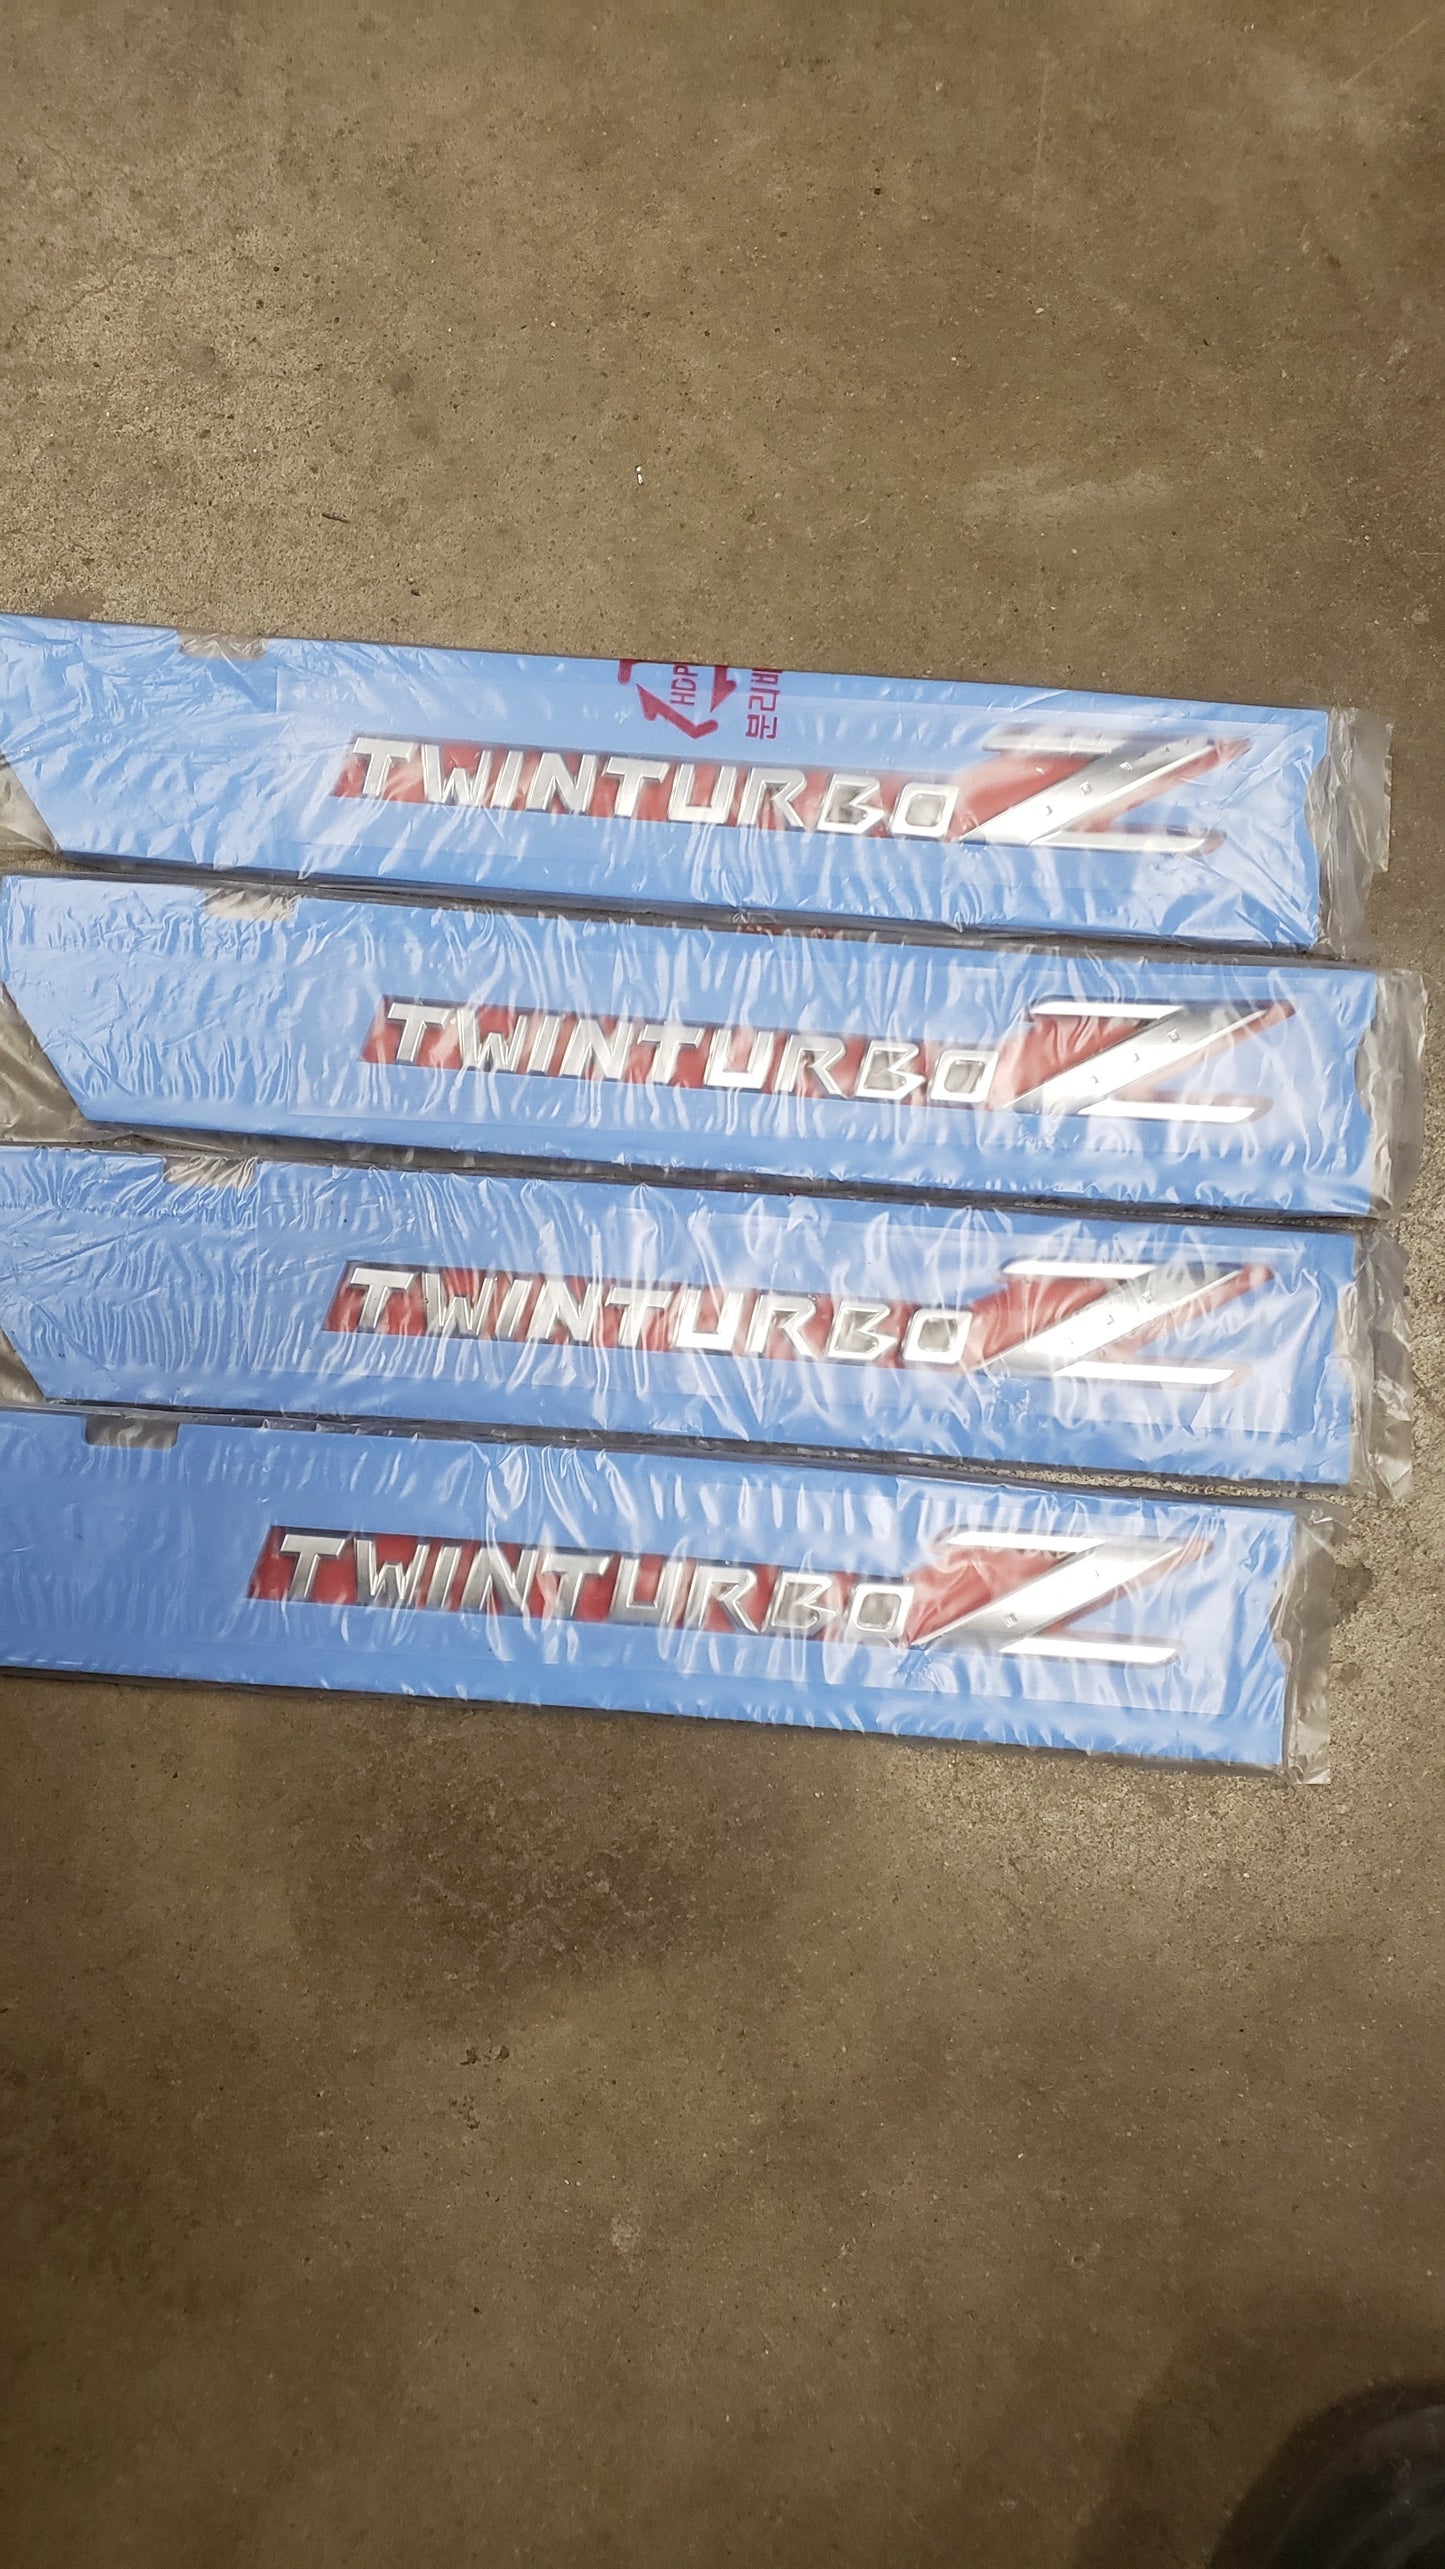 TwinturboZ badge